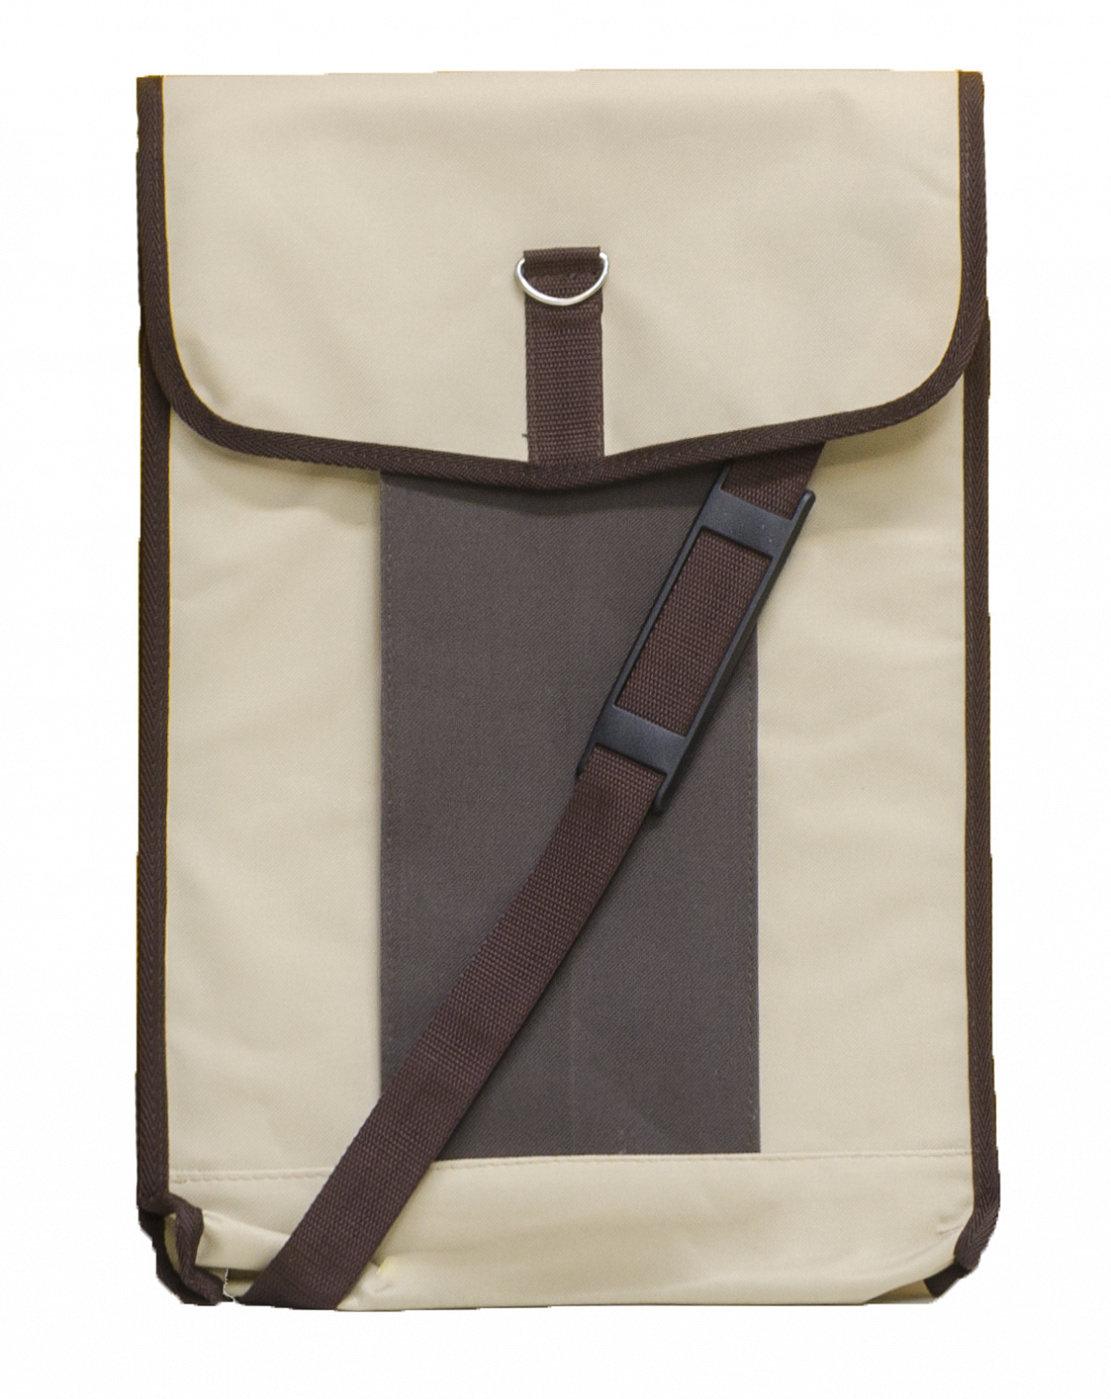 Сумка для планшета 42х30 (жест.) бежевая с коричневым карманом сумка для планшета 42х30 жест бежевая с коричневым карманом